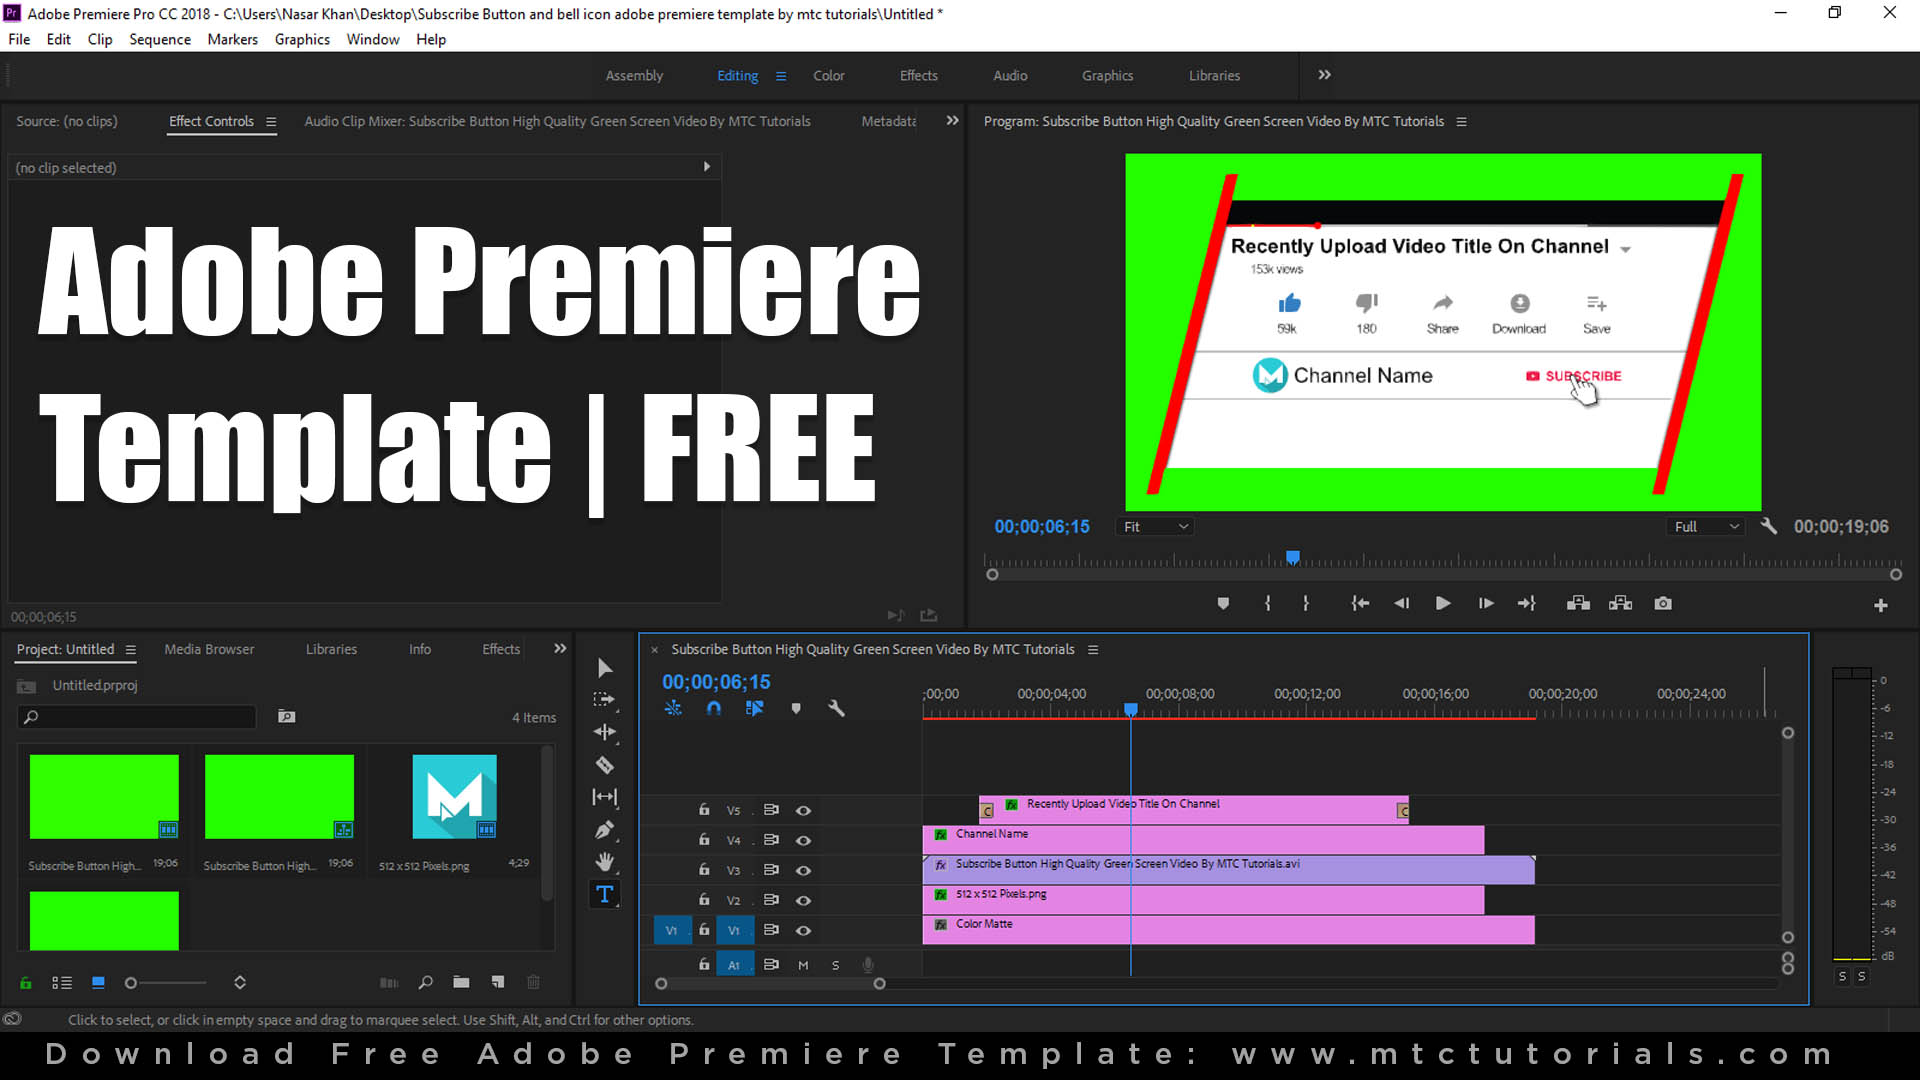 Free Adobe Premiere templates